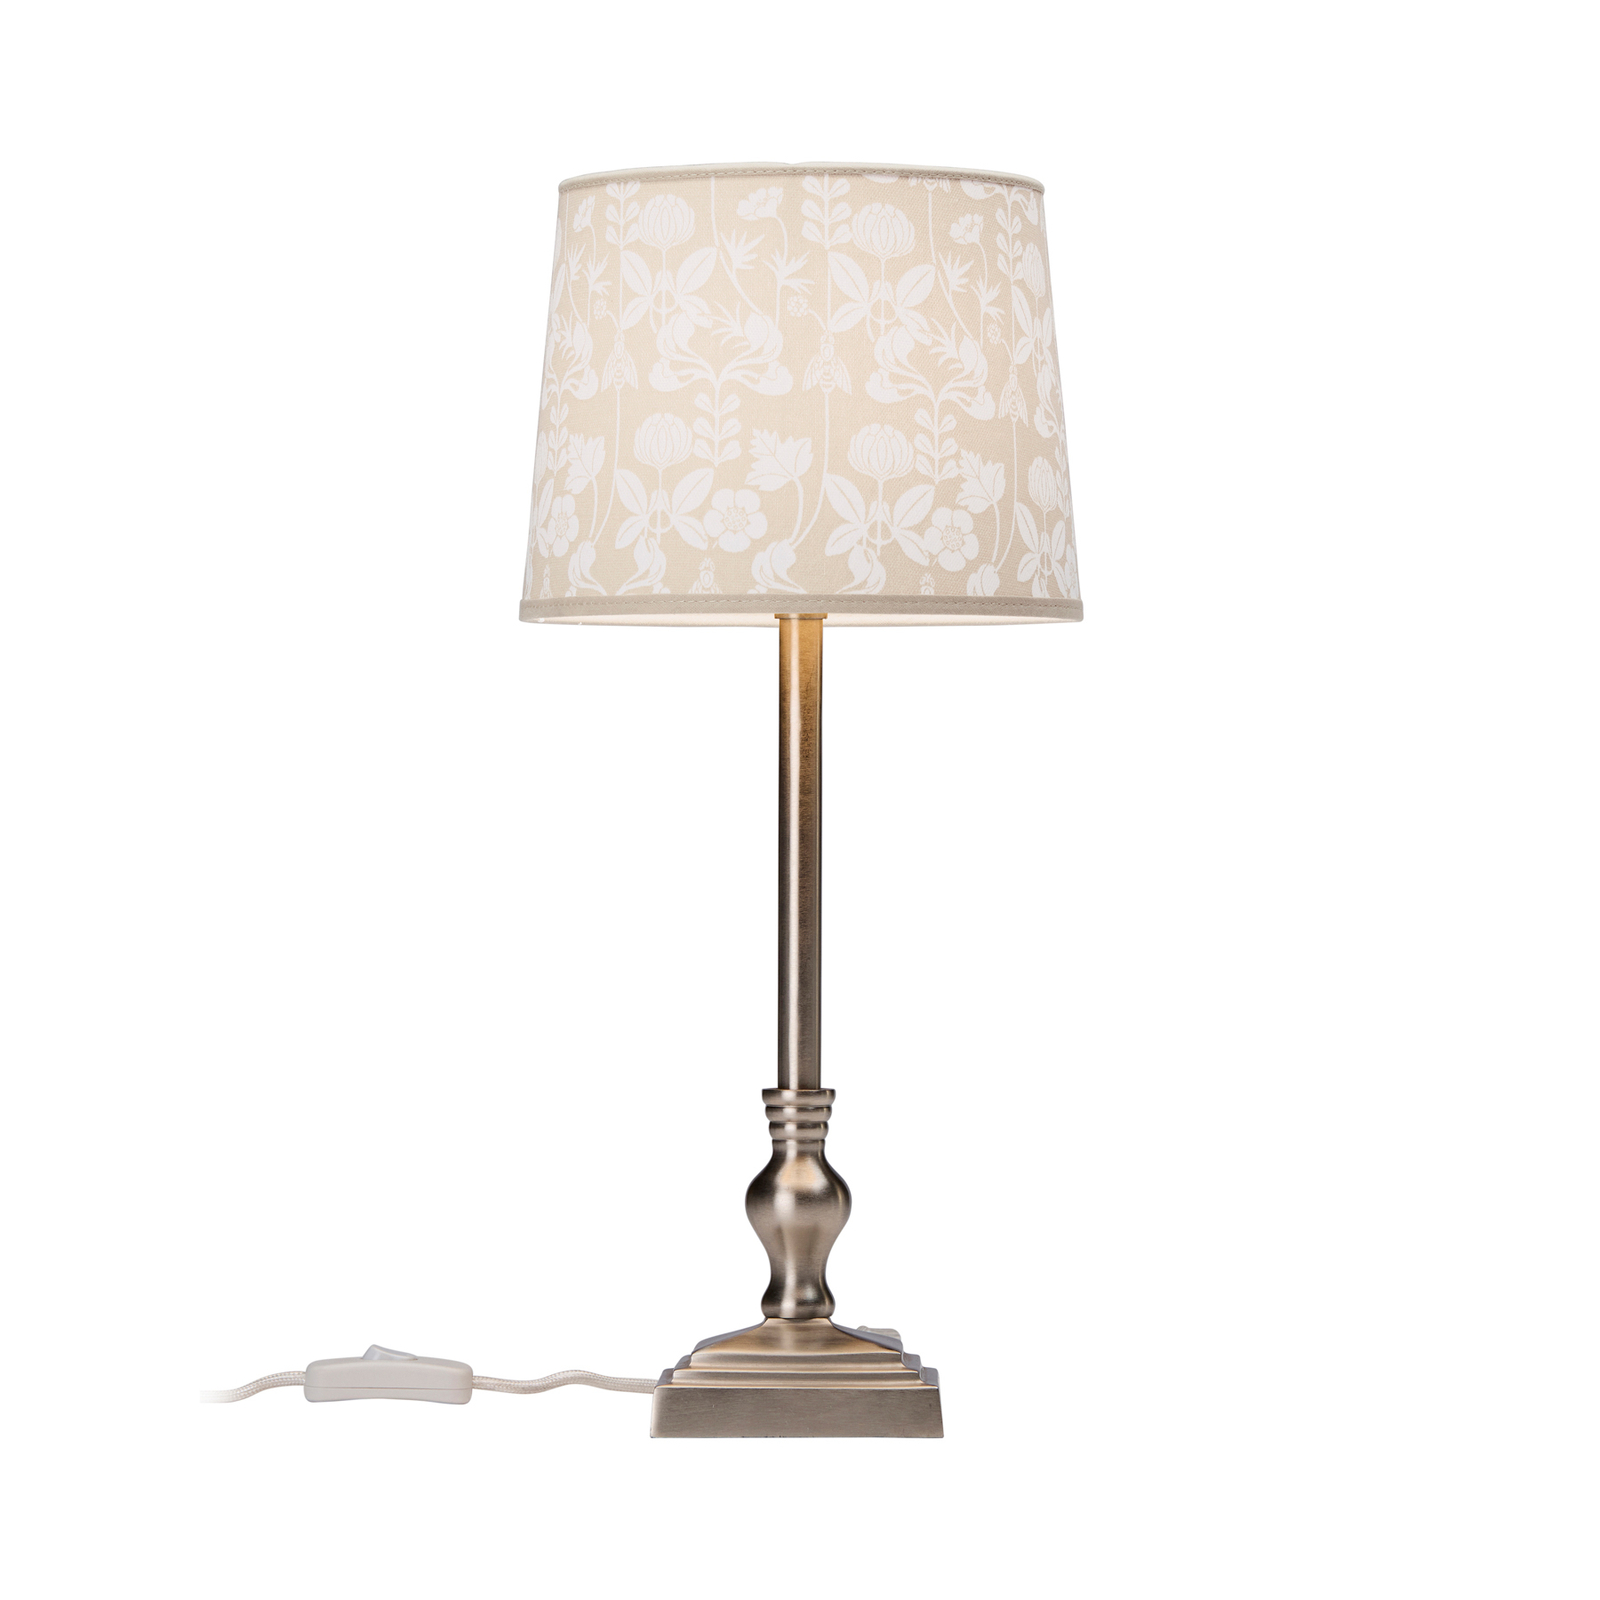 PR Home Lisa tafellamp mat chroom/beige gebloemd